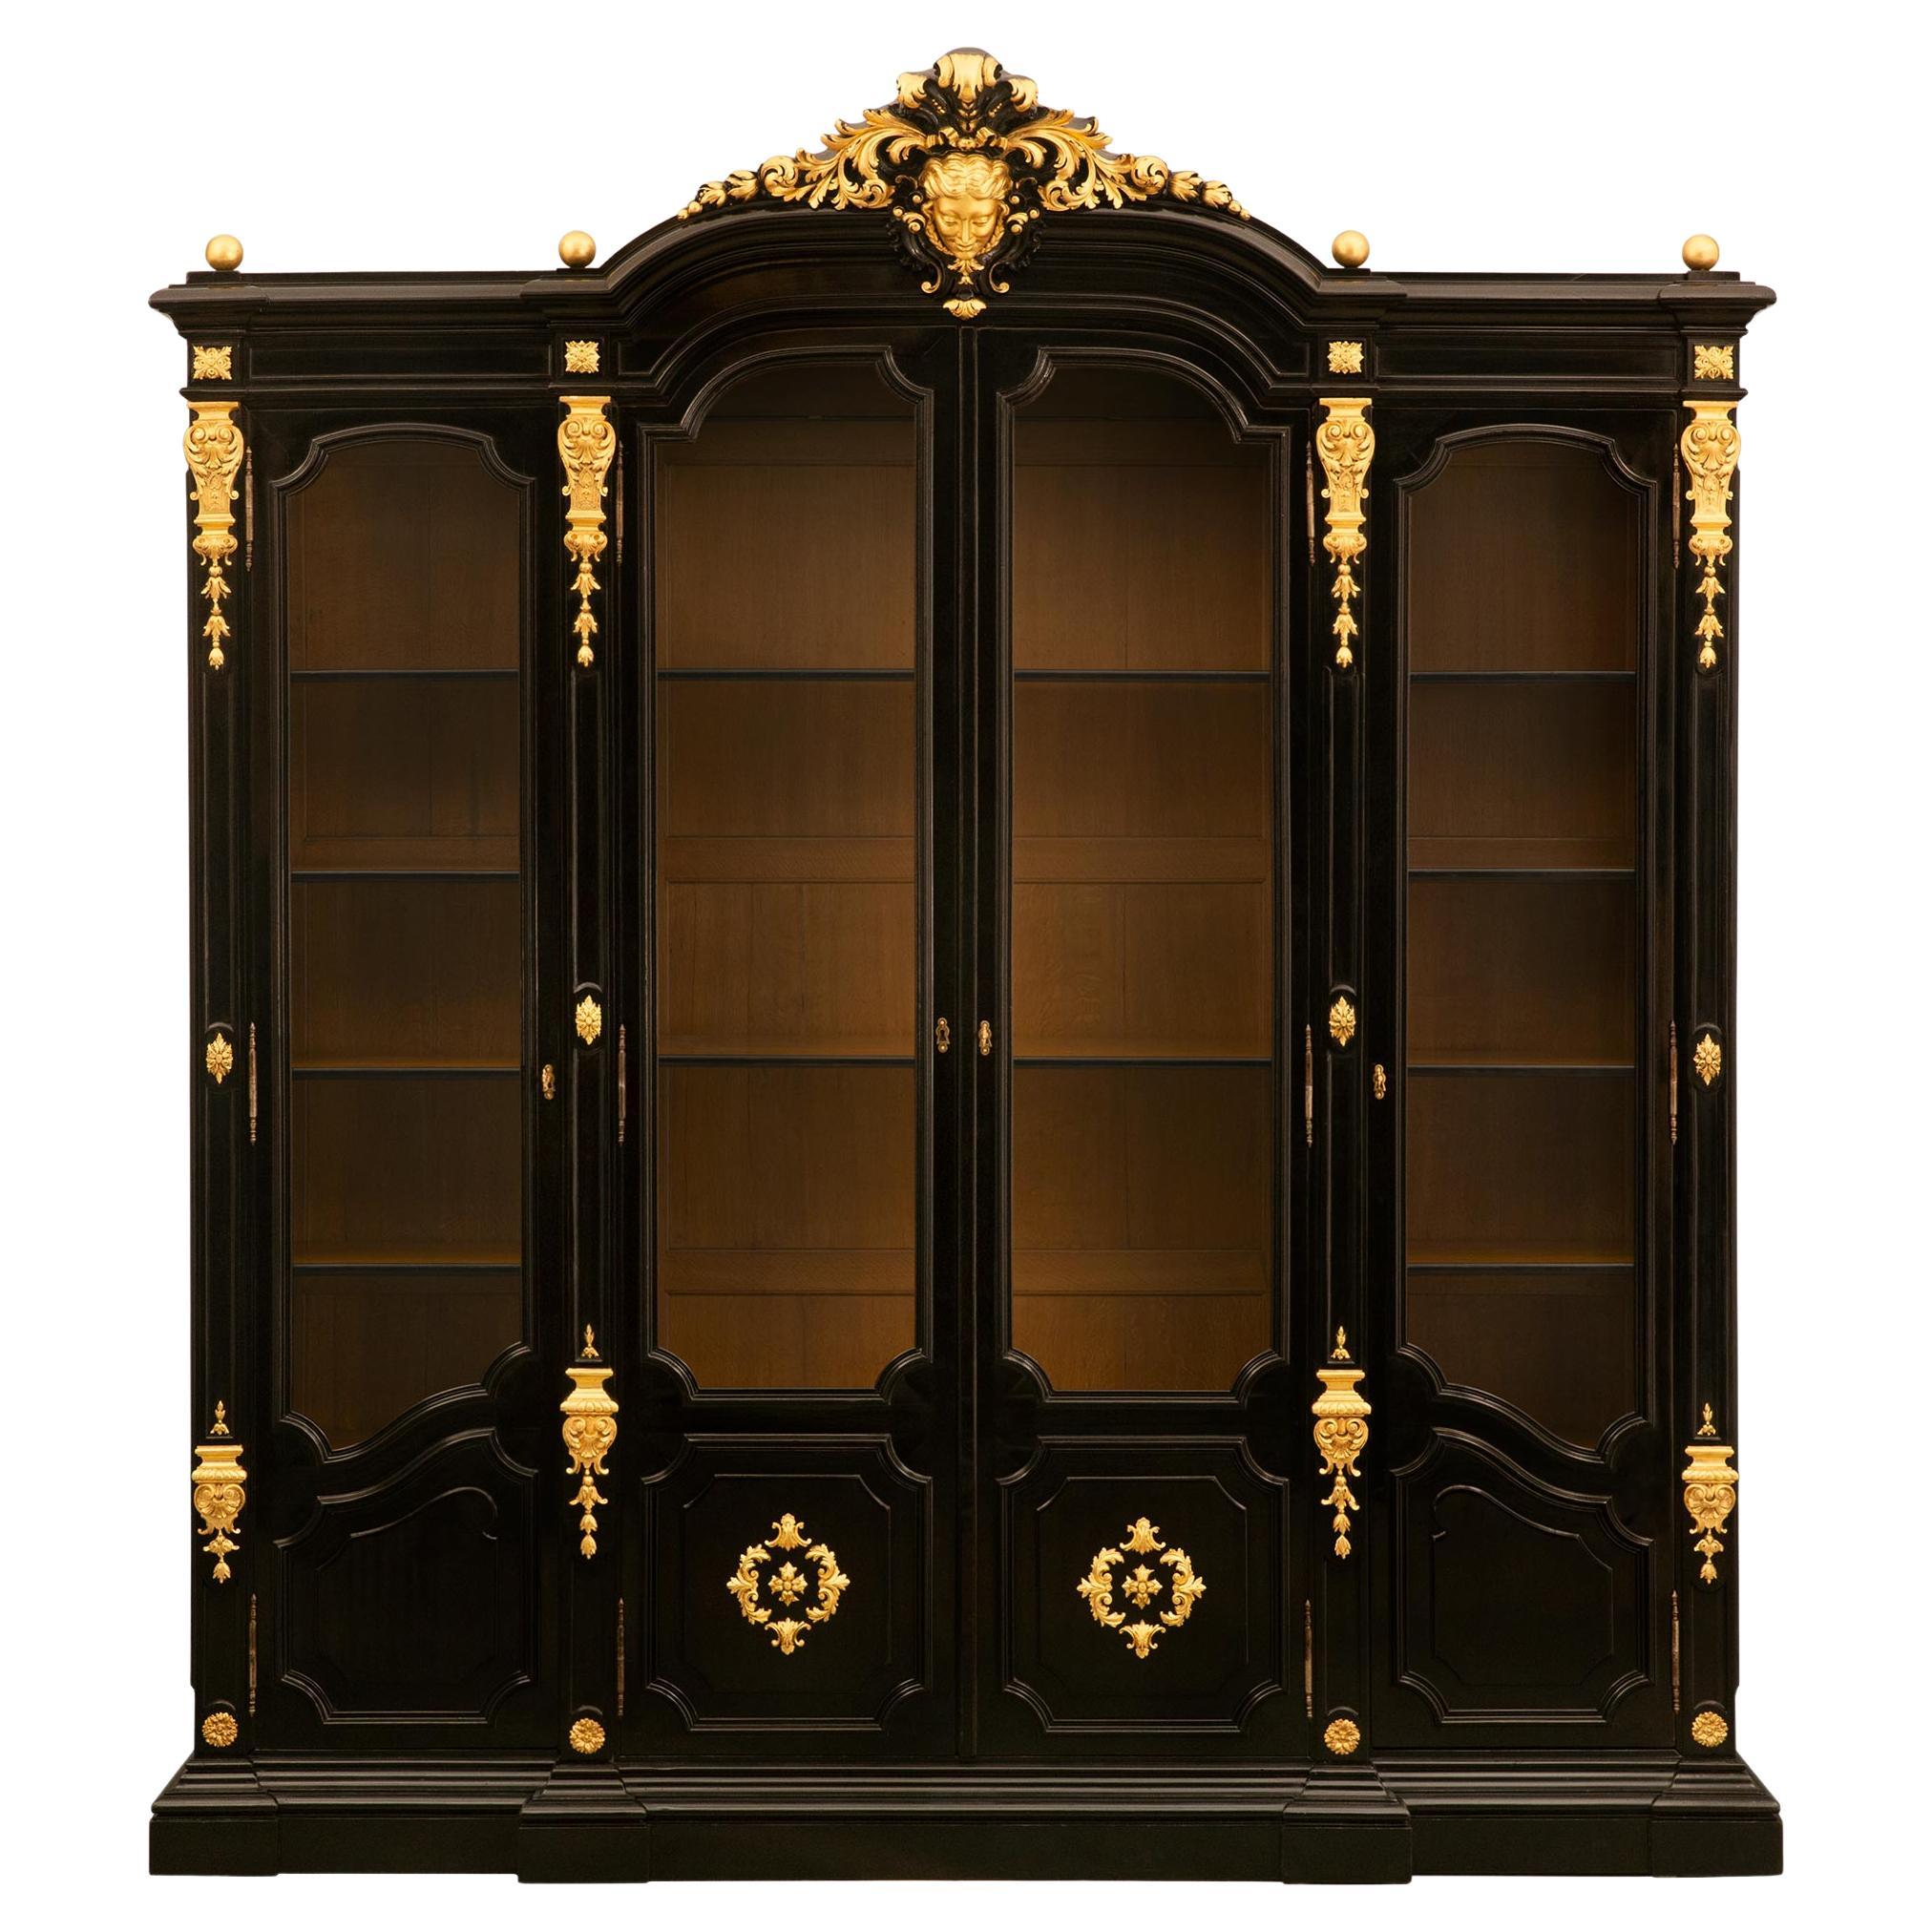 An Italian 19th century Rococo Revival st. ebonized giltwood vitrine For Sale